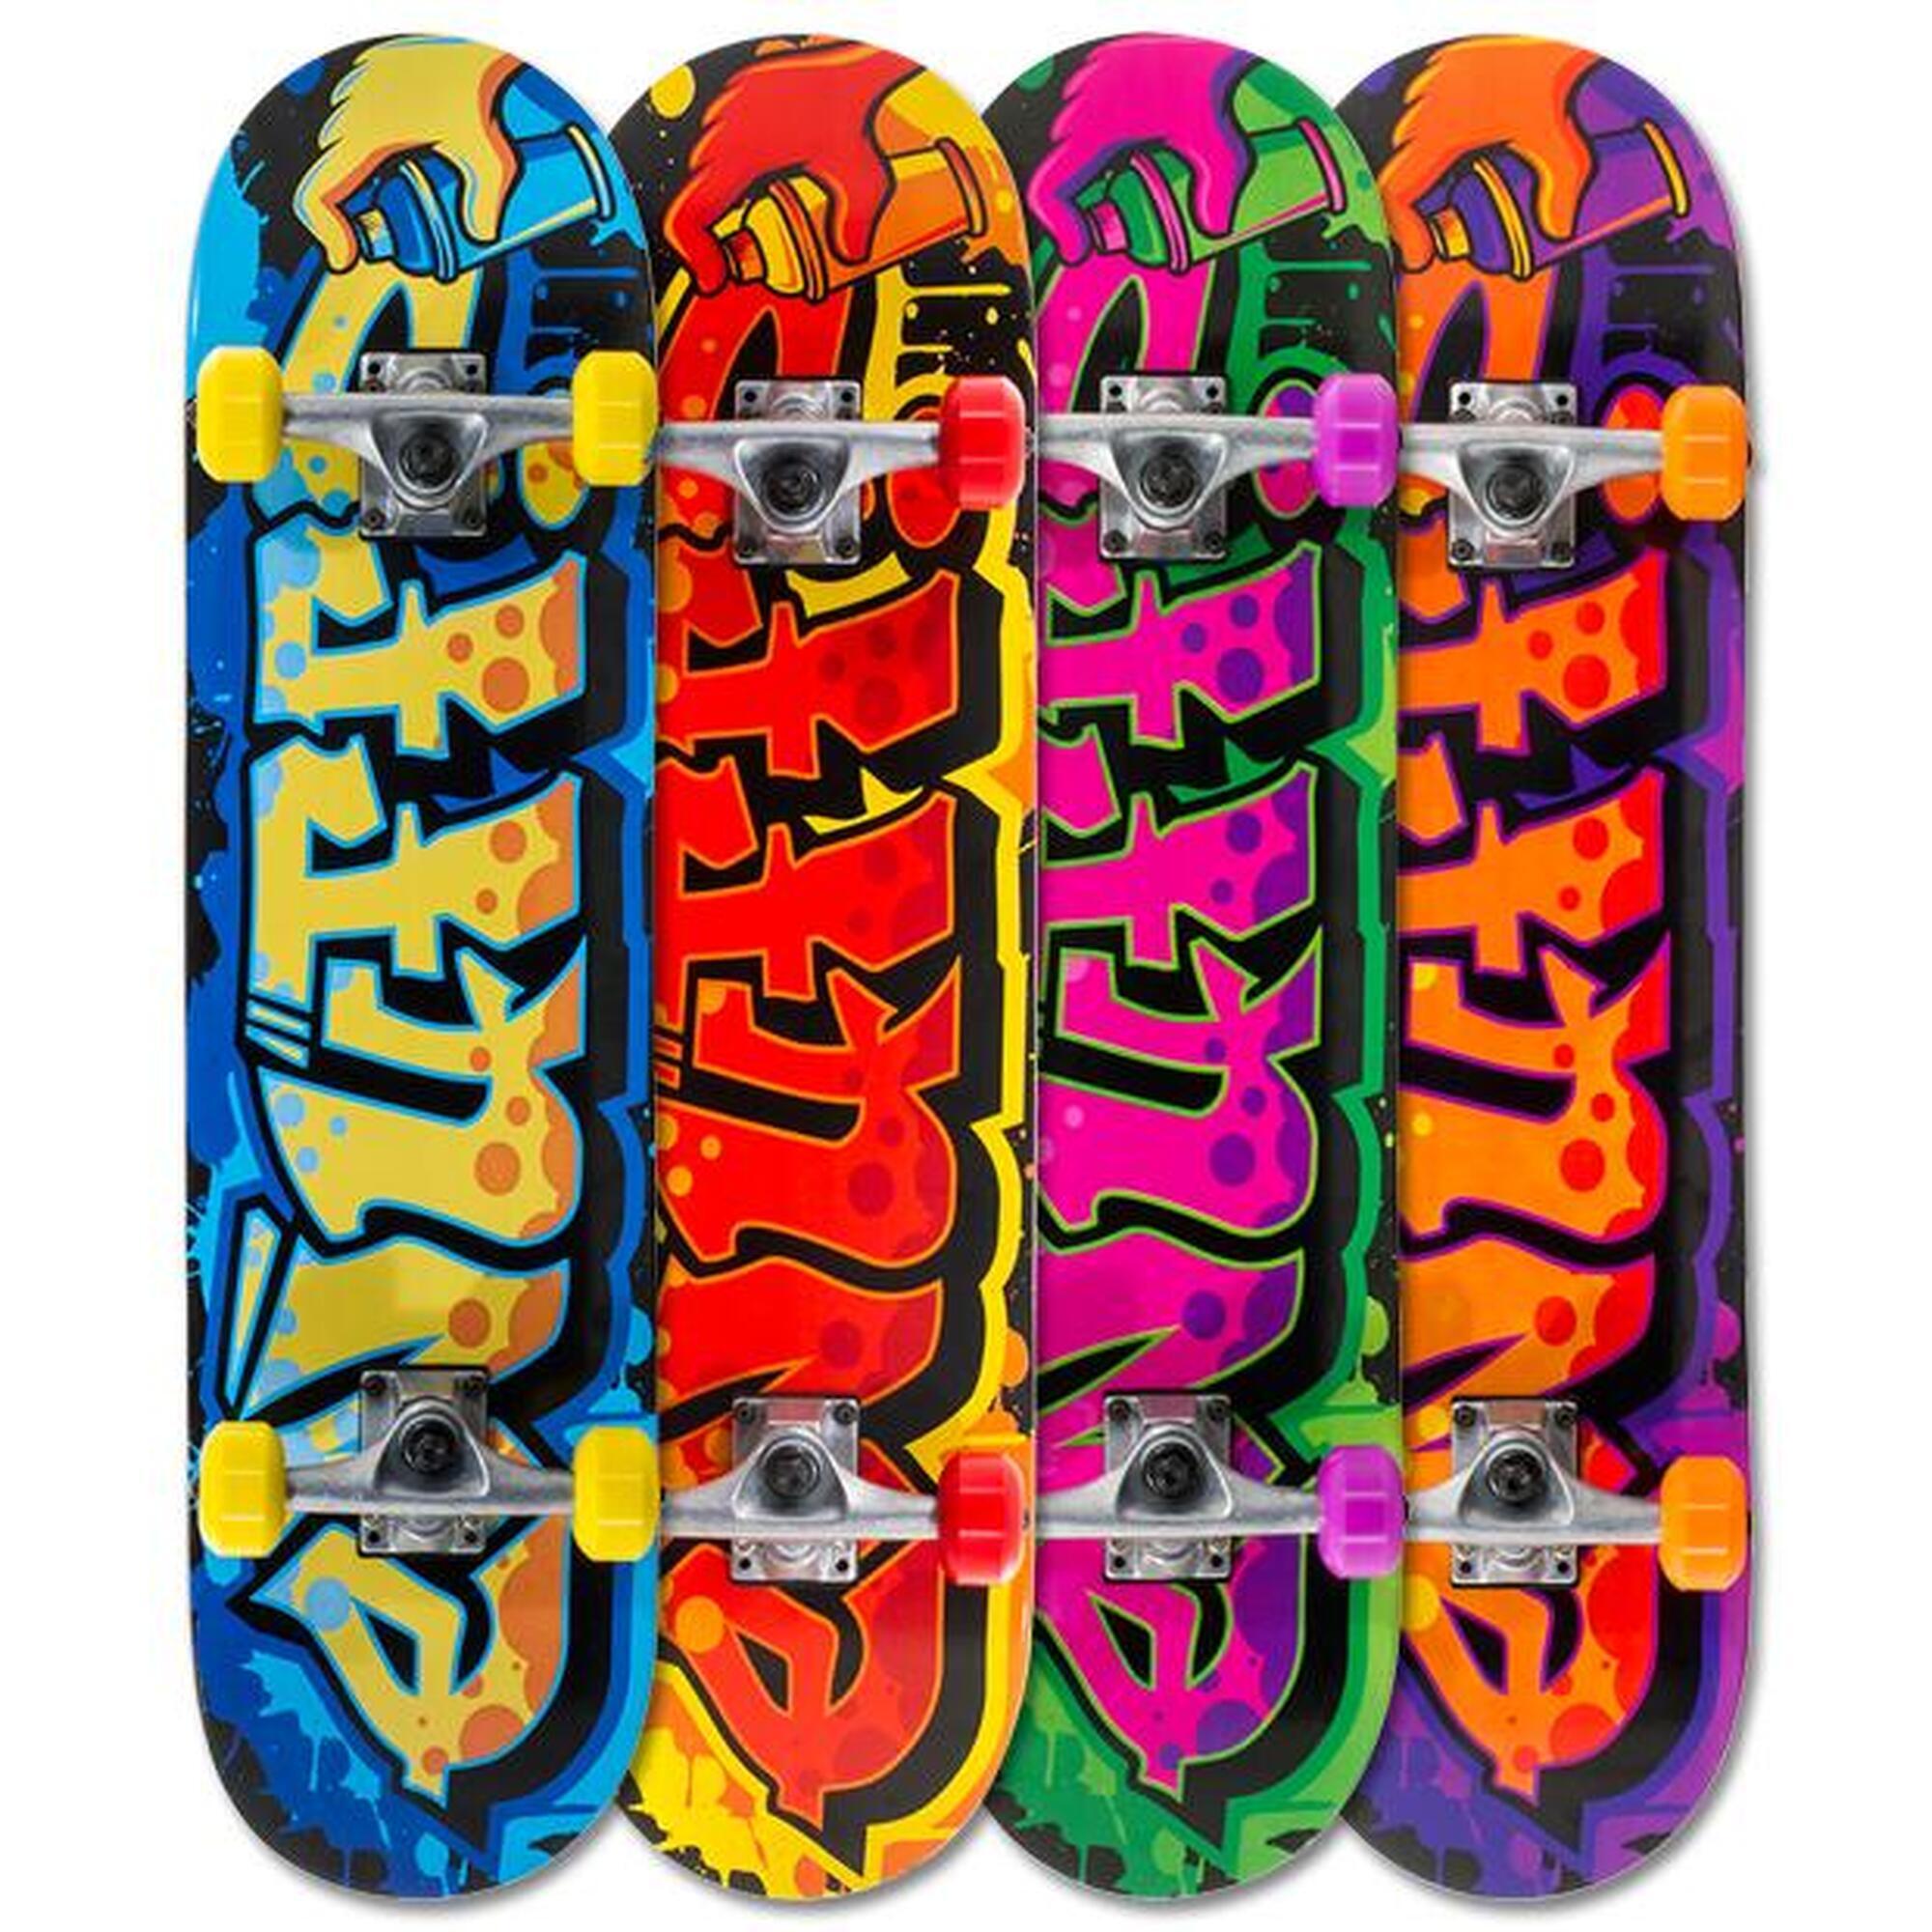 Skate Enuff Graffiti II 7.25"x29.5" Paars/Oranje Skateboard